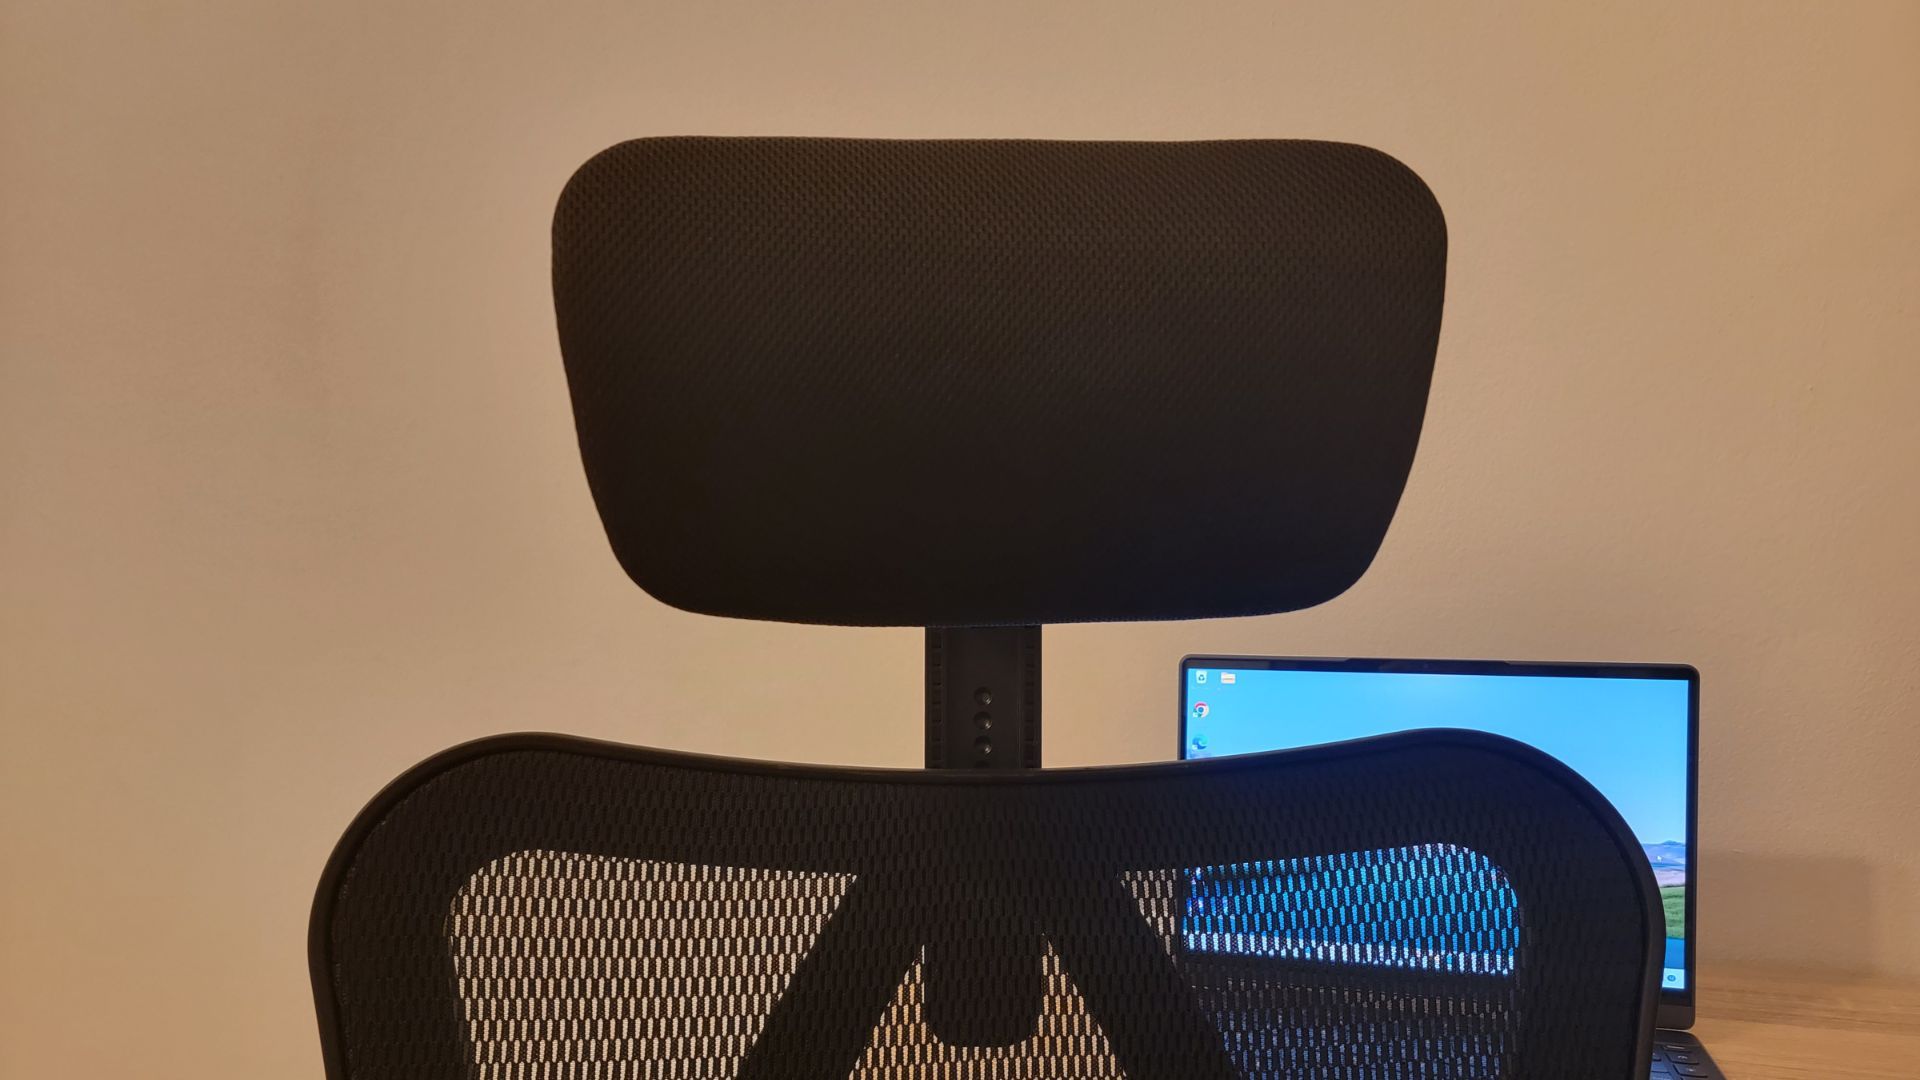 Adjustable headrest on the SIHOO M18 office chair